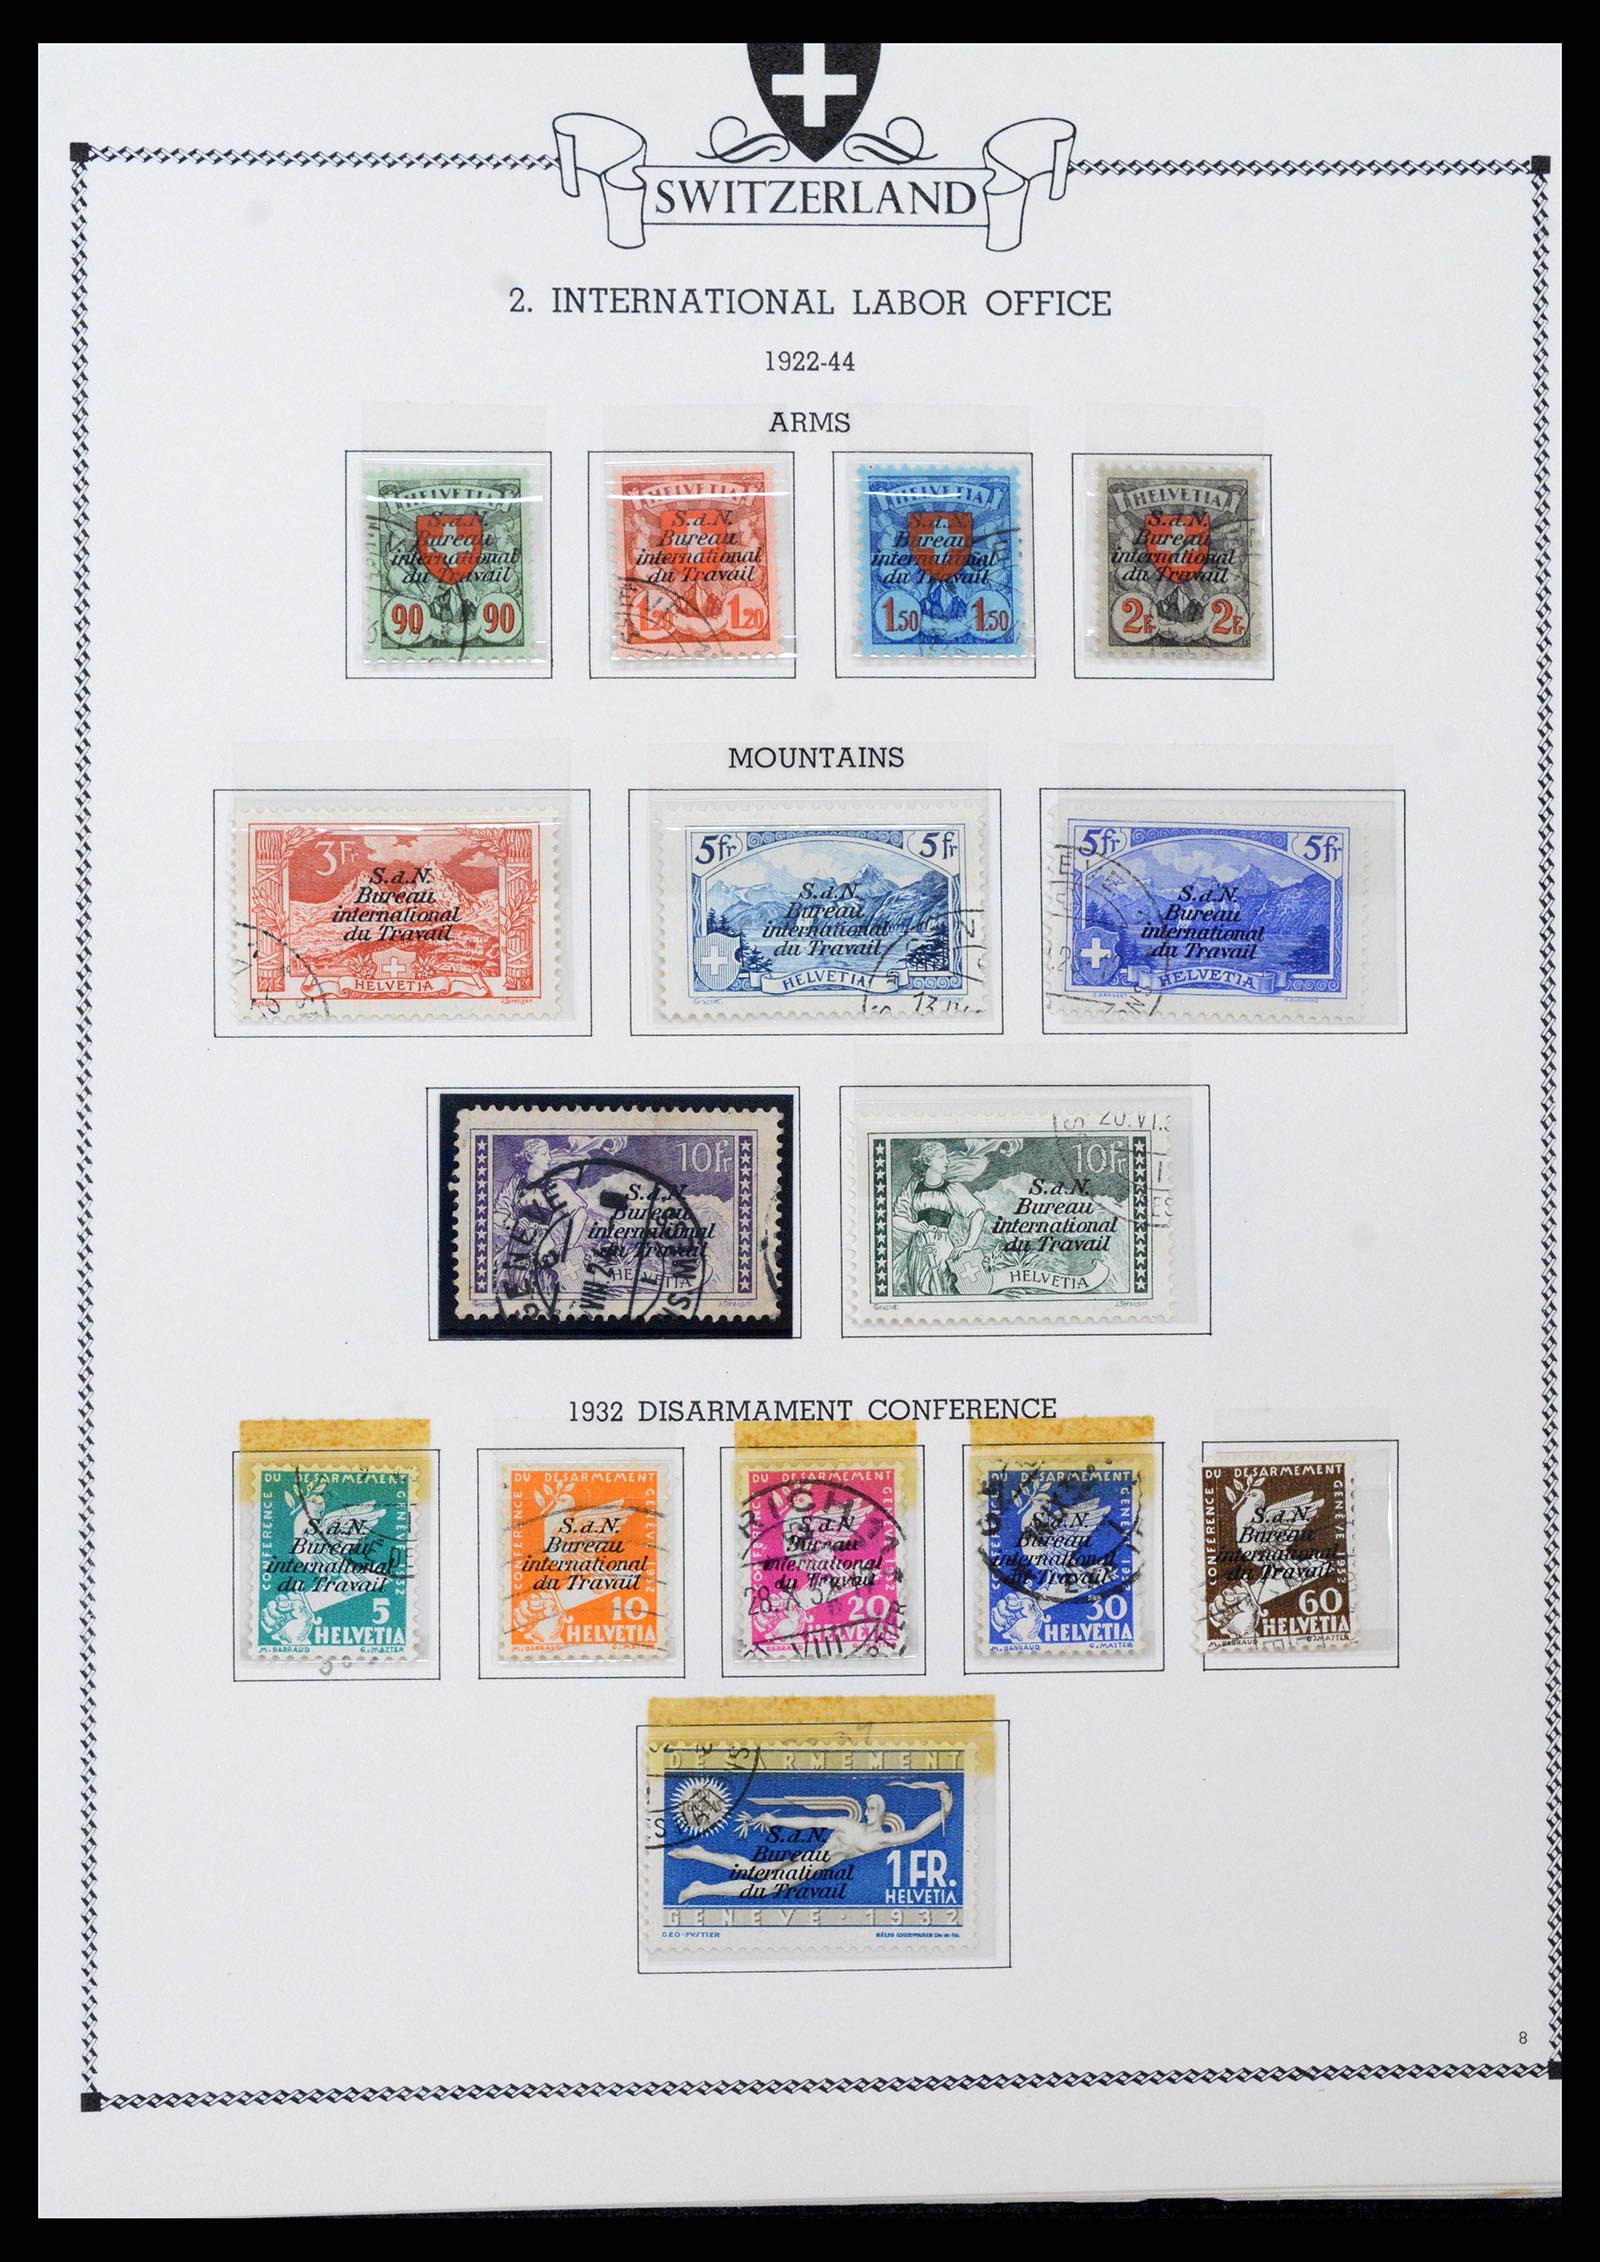 38905 0192 - Stamp collection 38905 Switzerland 1850-1995.